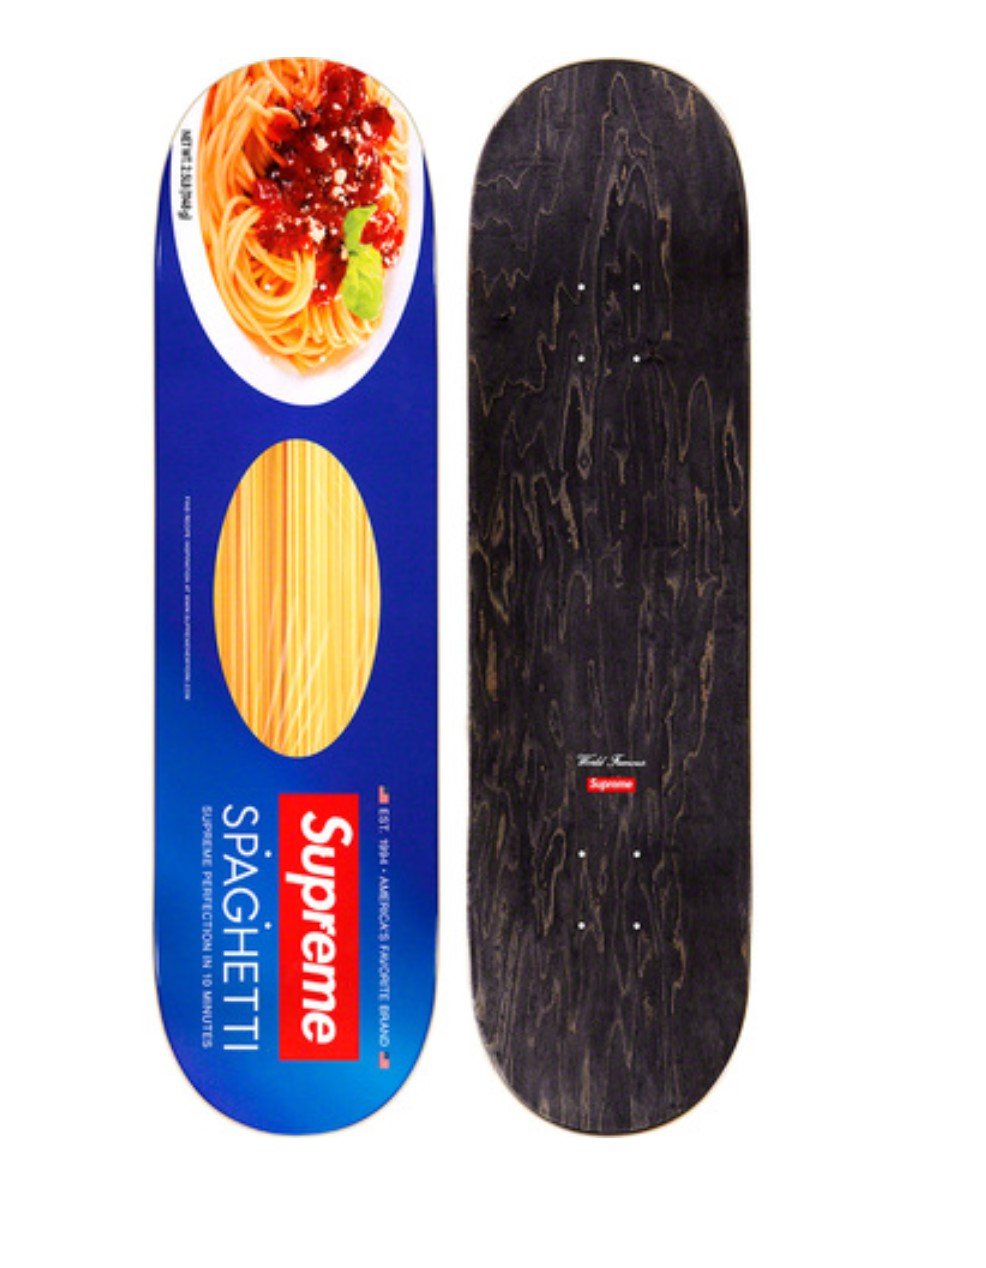 Spaghetti Skateboard Blue Skateboard Art Deck by Supreme – Sprayed